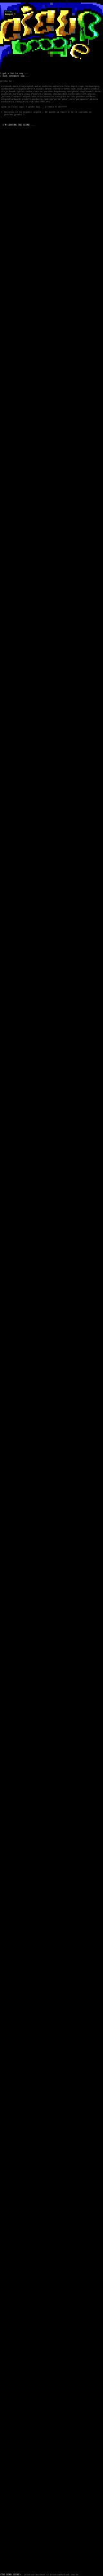 cielo boogie logo by minotaur